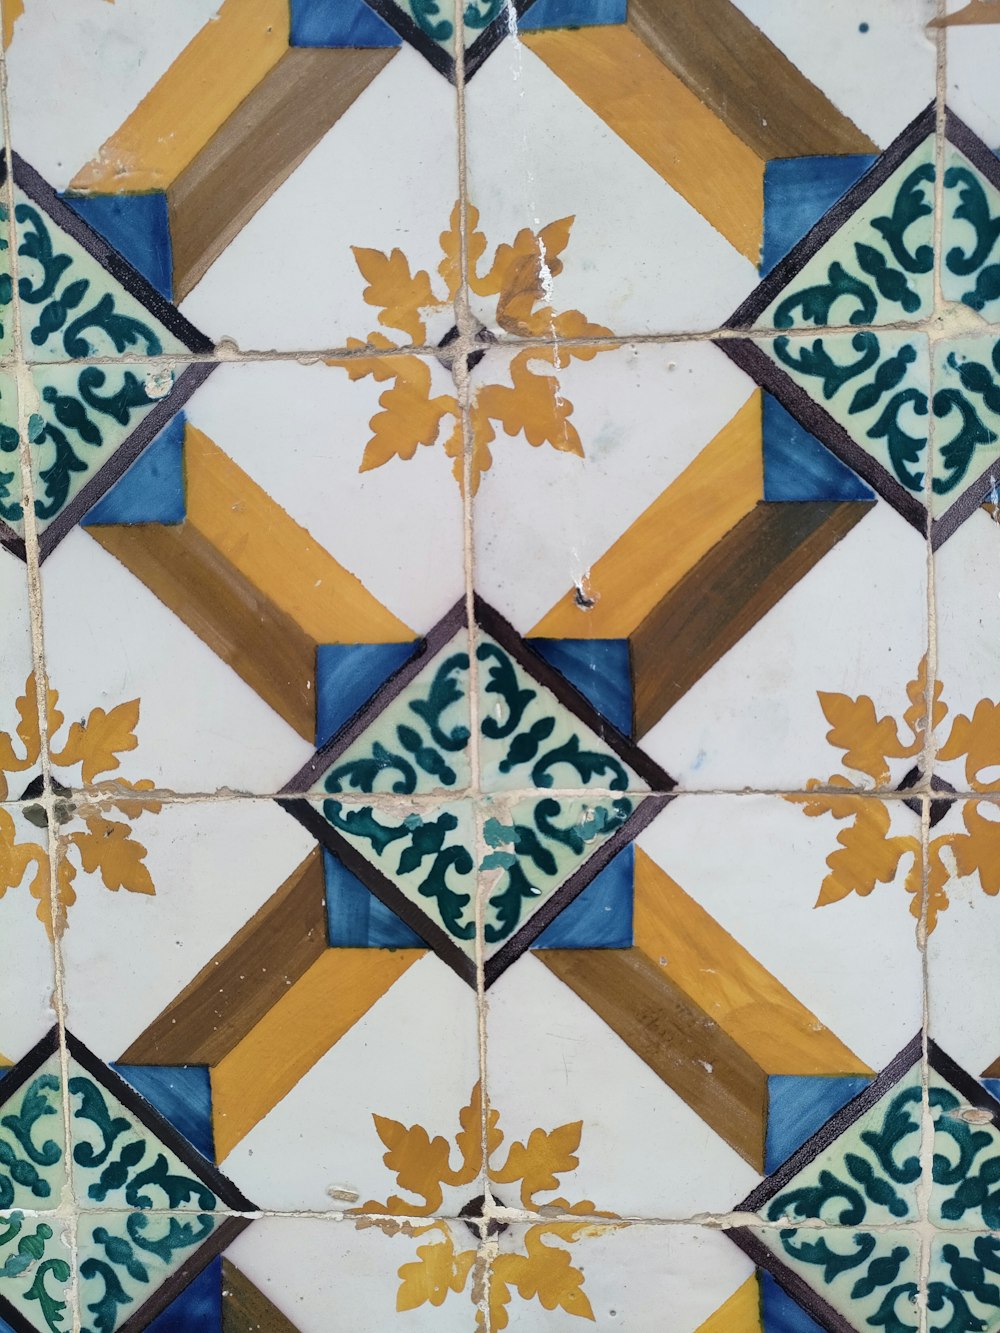 a close up of a colorful tile design